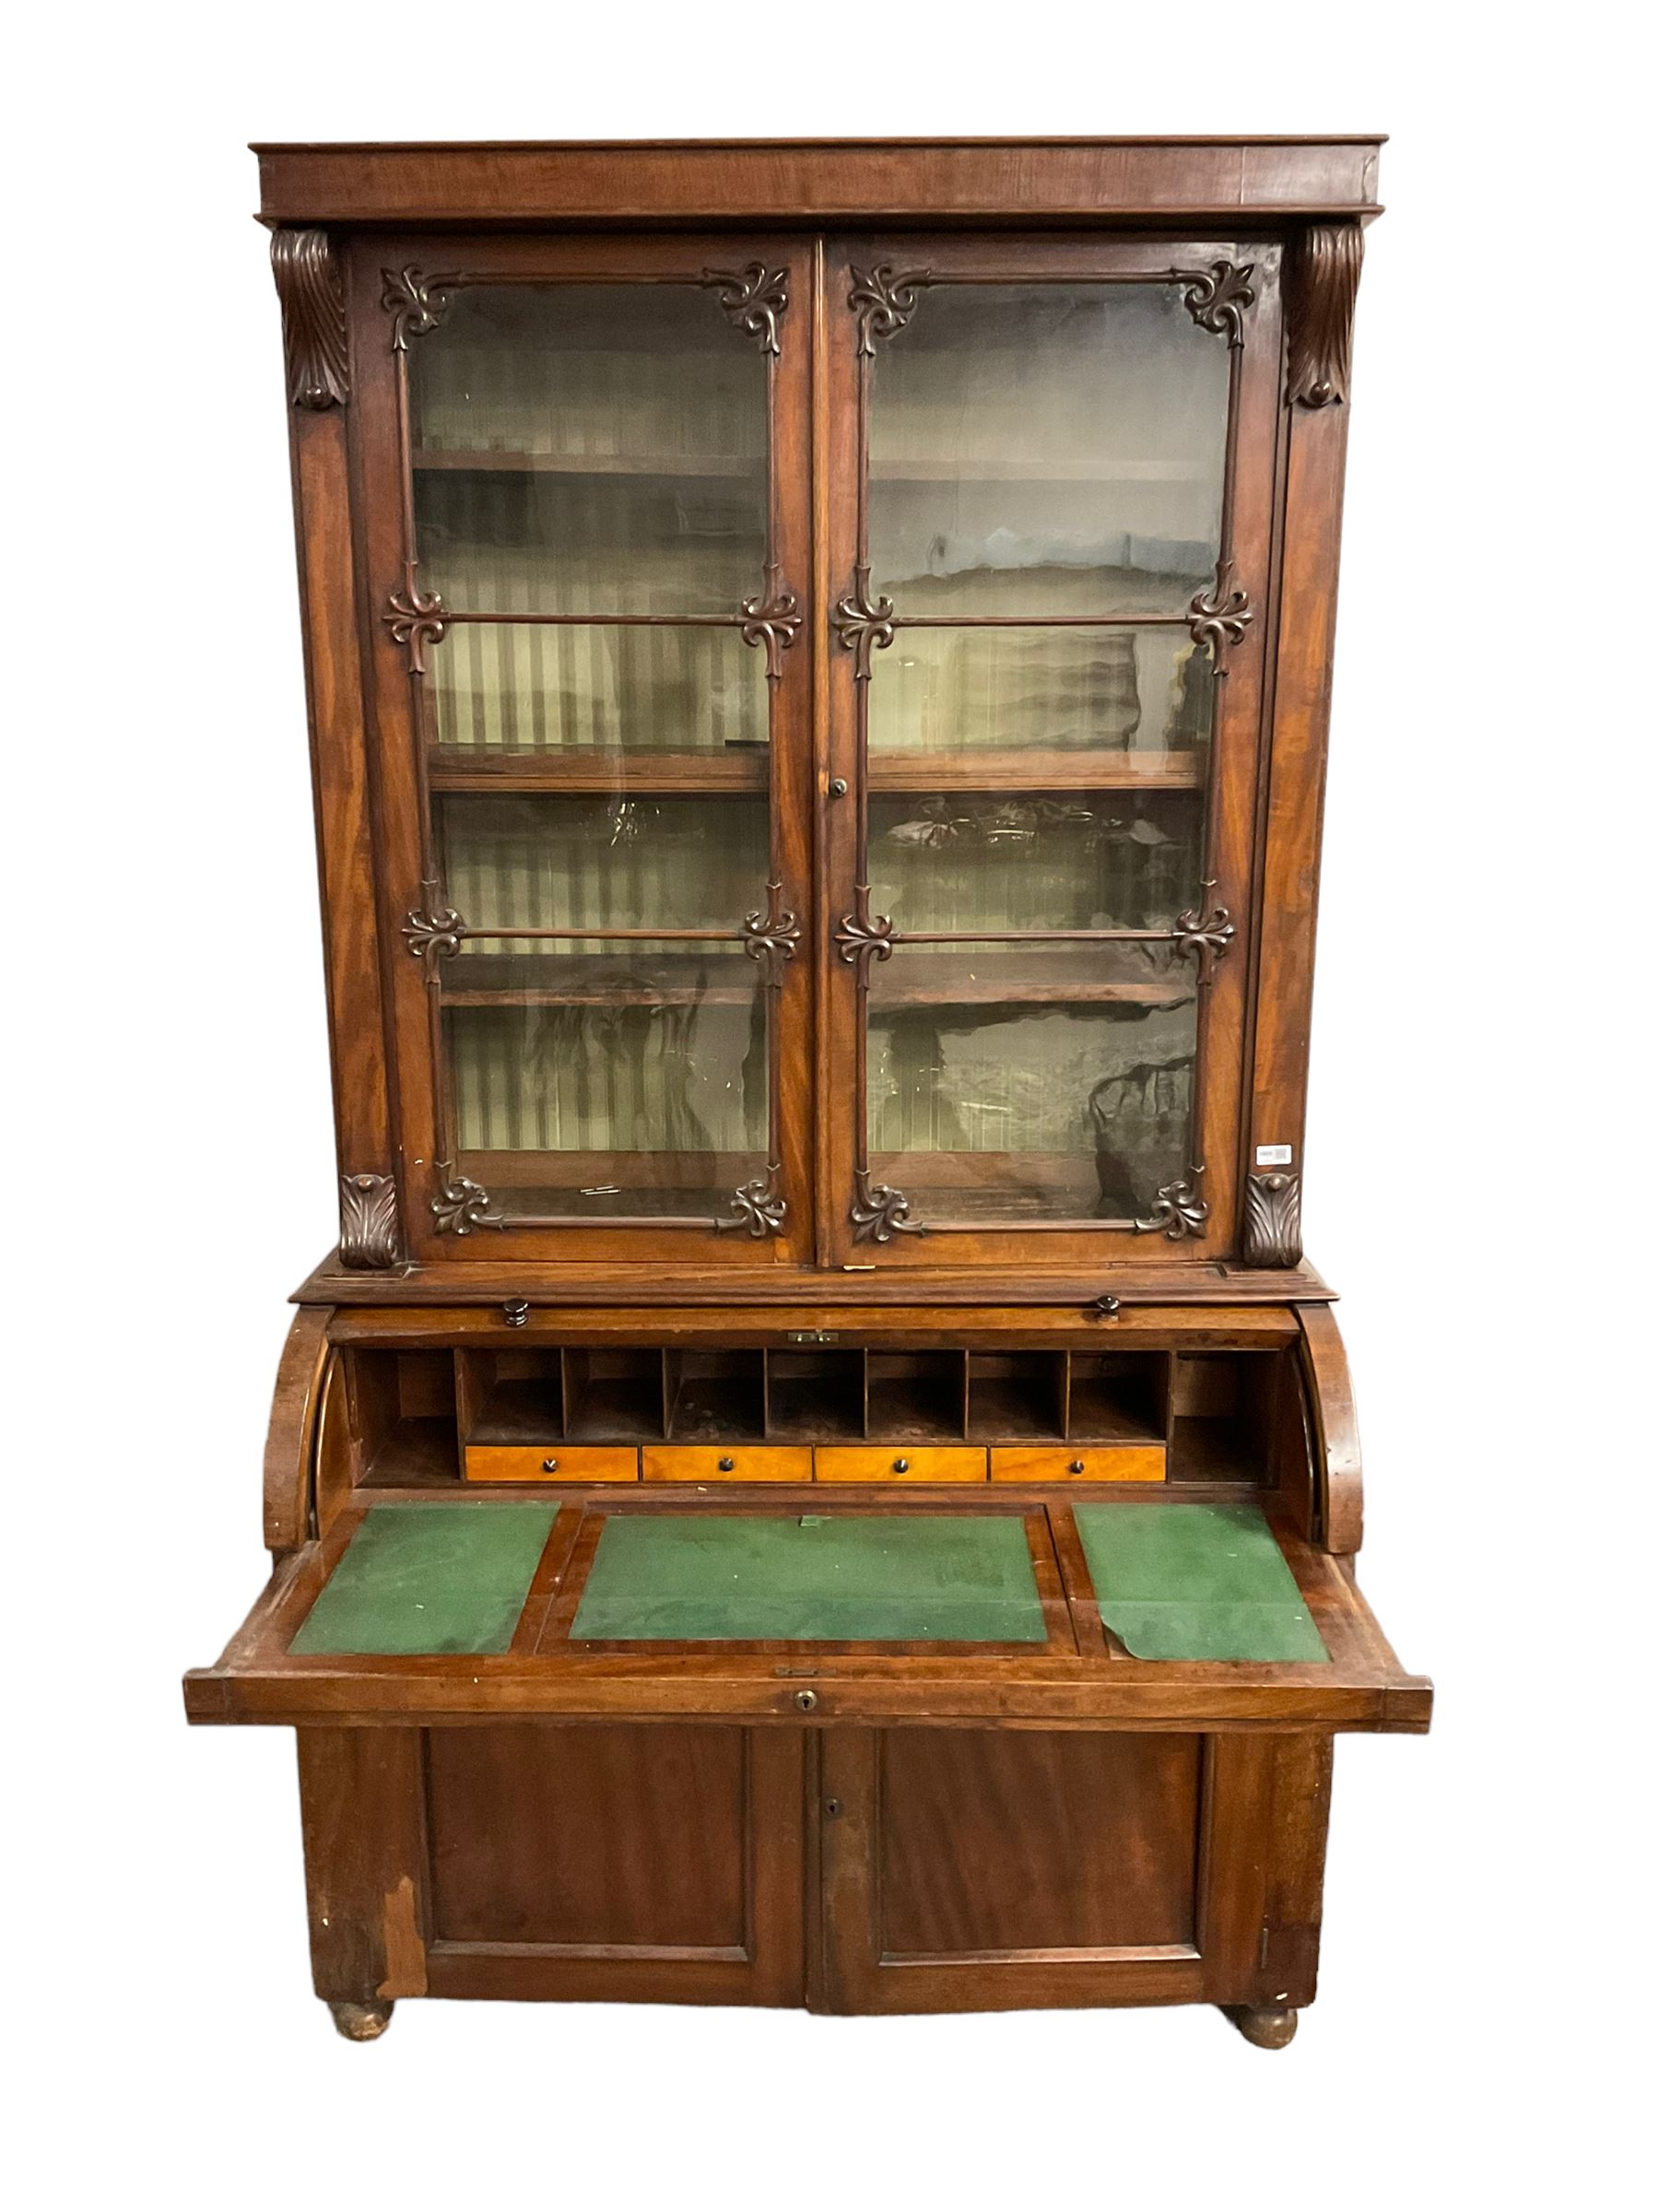 Mid-19th century mahogany secretaire bookcase - Image 4 of 4